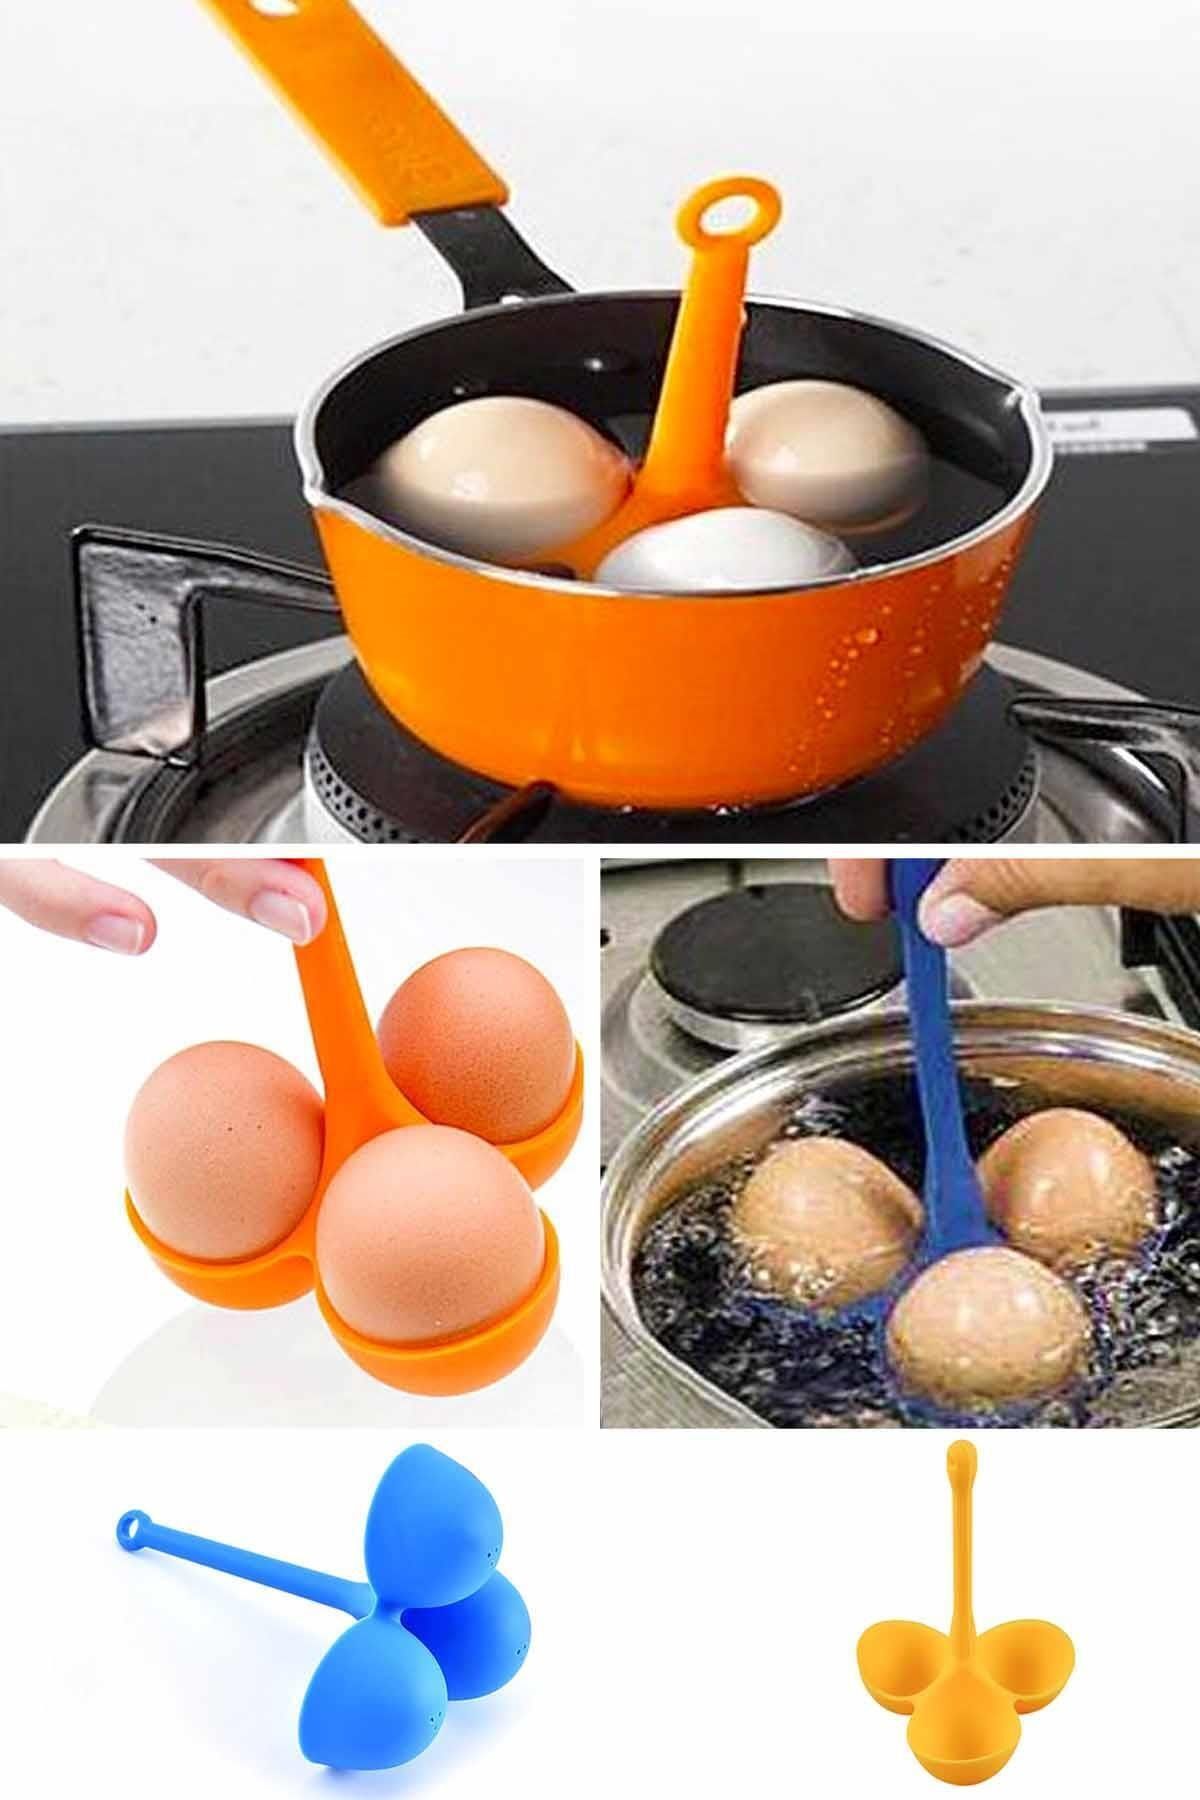 helen s home yumurta haslama aparati yumurta pisirme kabi fiyati yorumlari trendyol